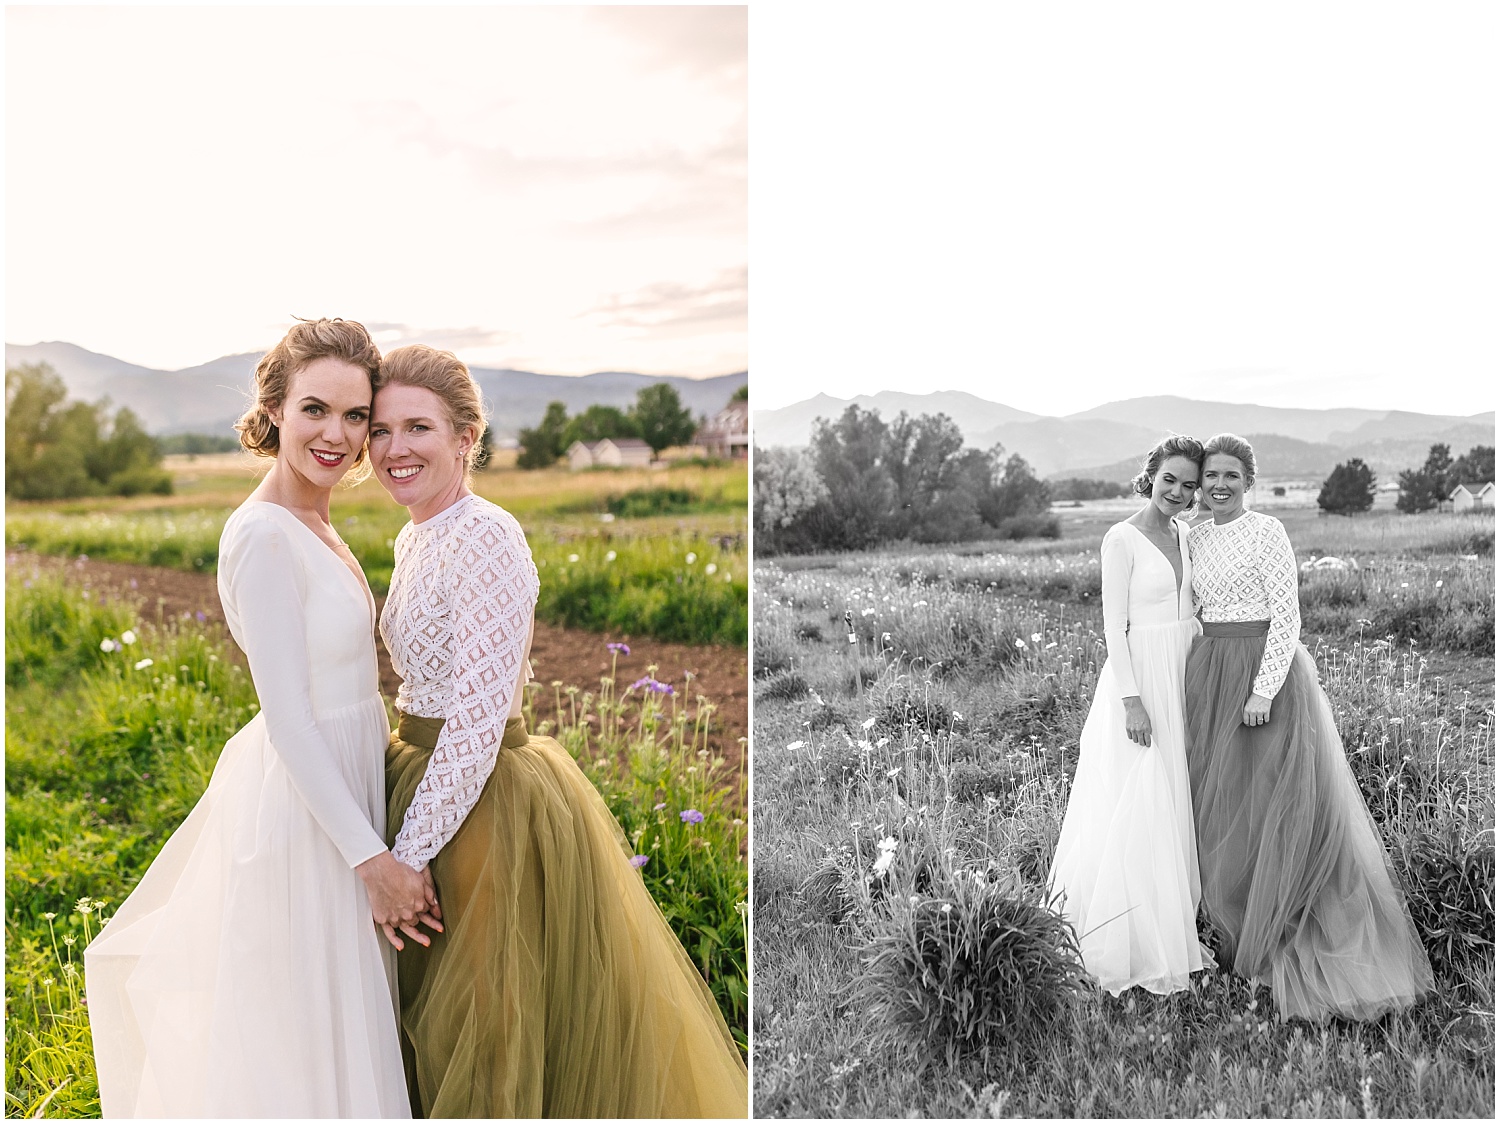 Bridal portraits at sunset at Pastures of Plenty wedding in Boulder Colorado